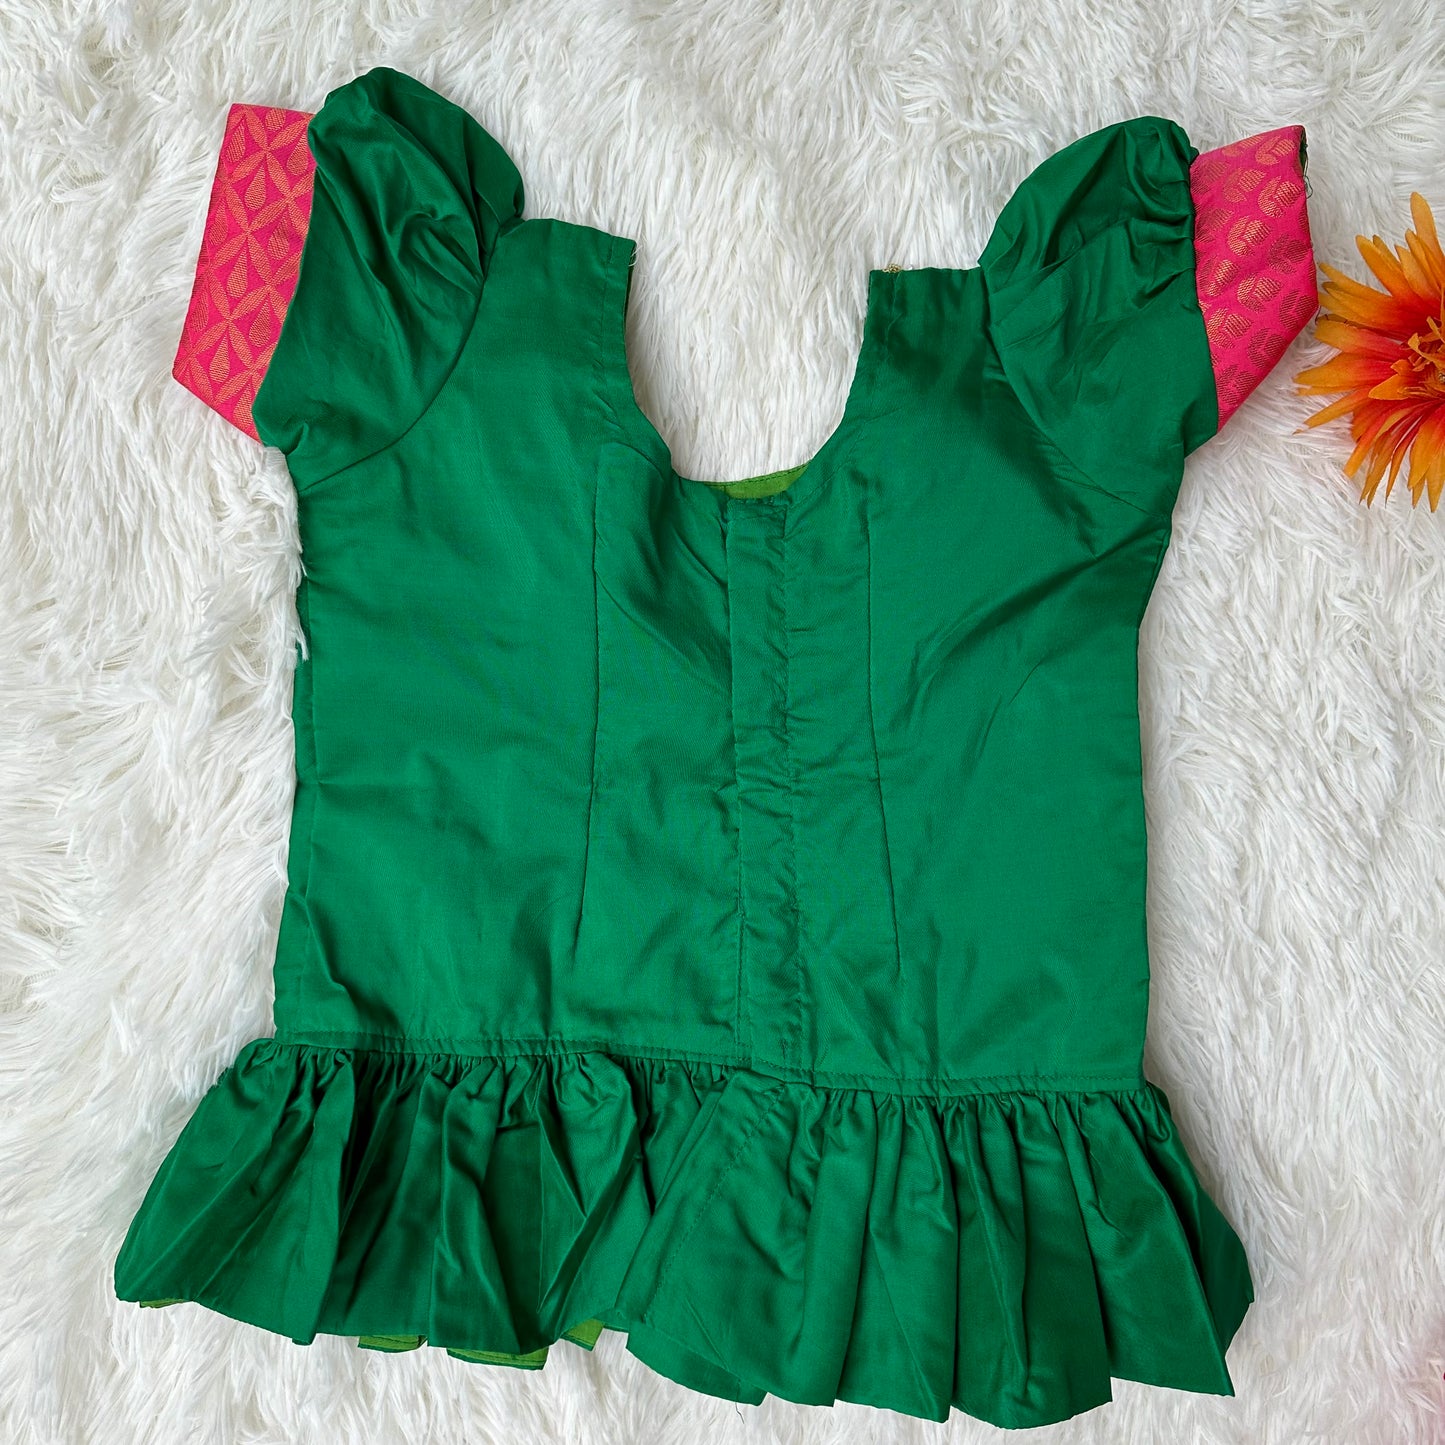 Lush Harmony: Green Top with Pink Aari Work Skirt